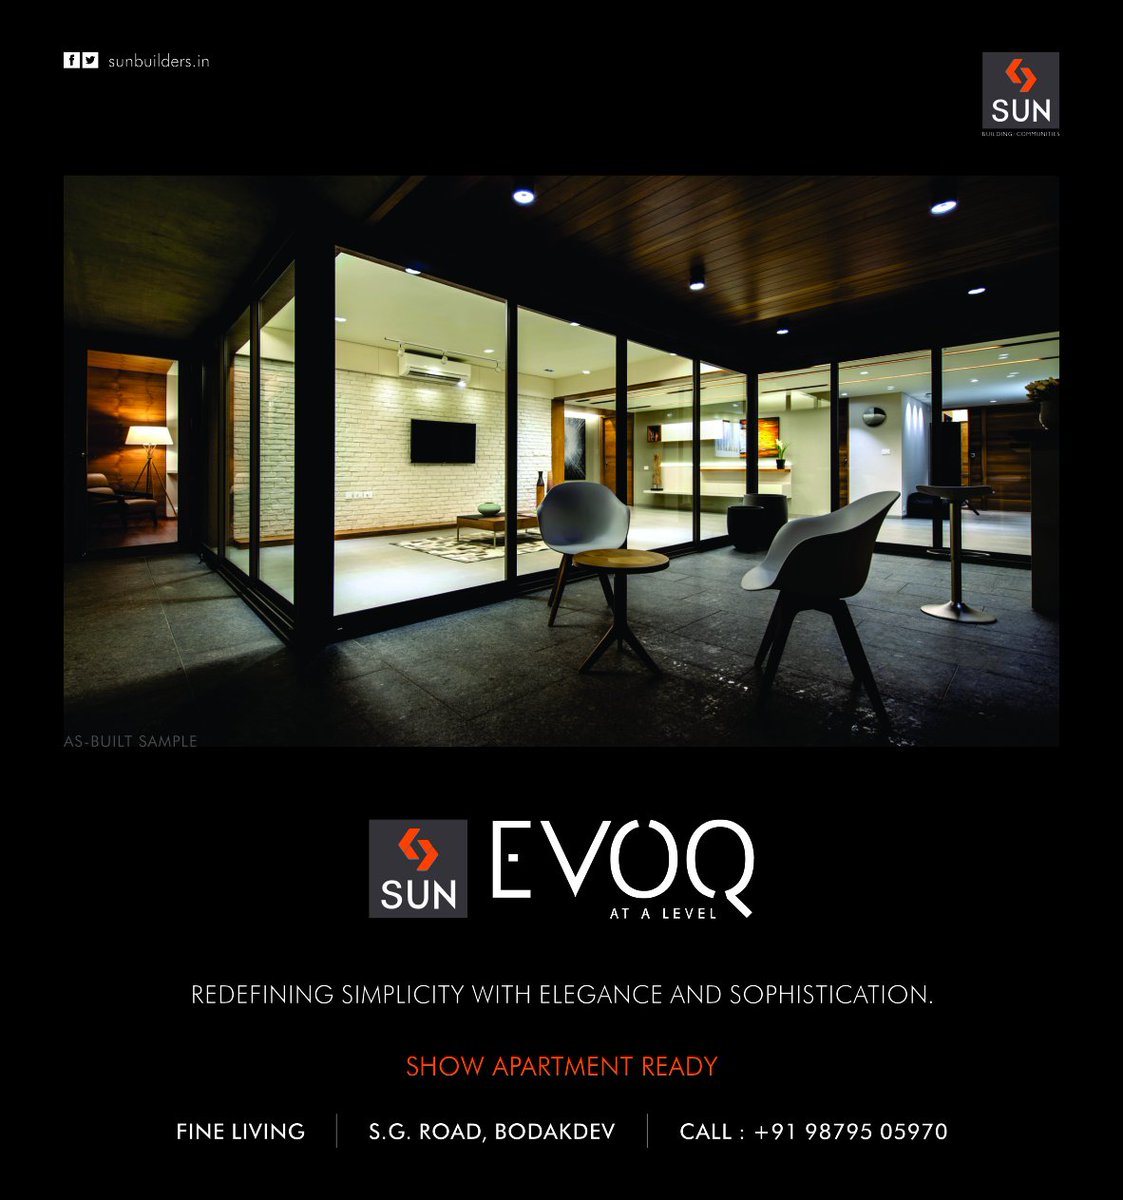 Indulge in the finest of elegance at Sun Evoq.
Show apartment ready!
Visit https://t.co/86vxZoYPJ6 now! https://t.co/XbVNvNvDC3